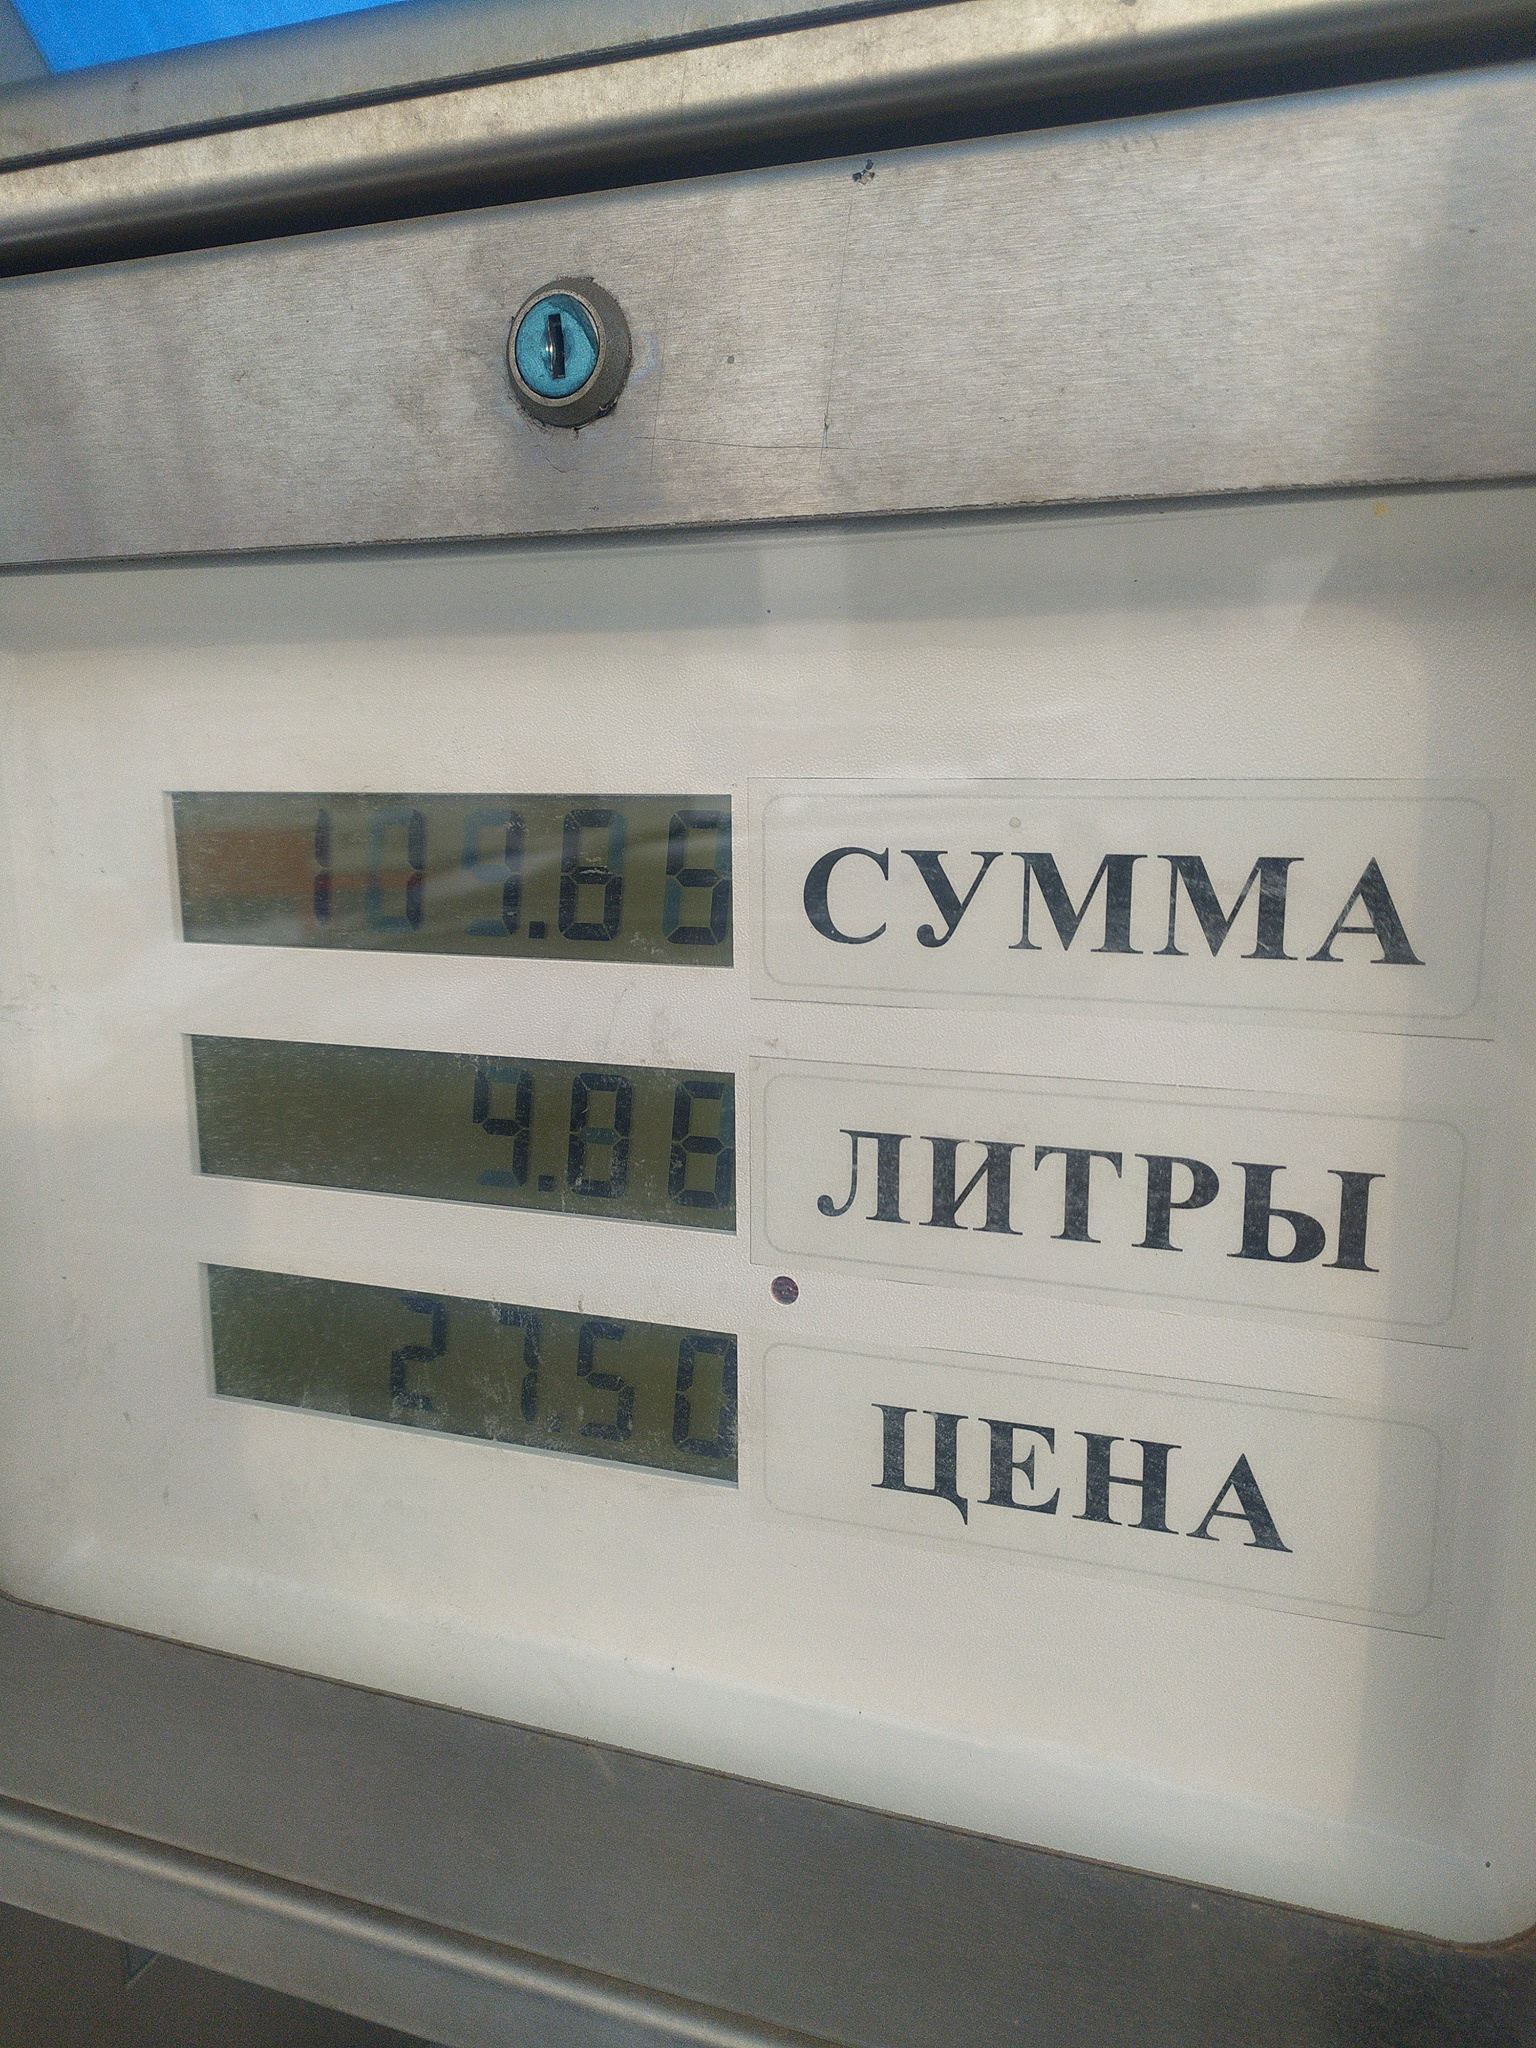 Цена за последнее время выросла на два рубля